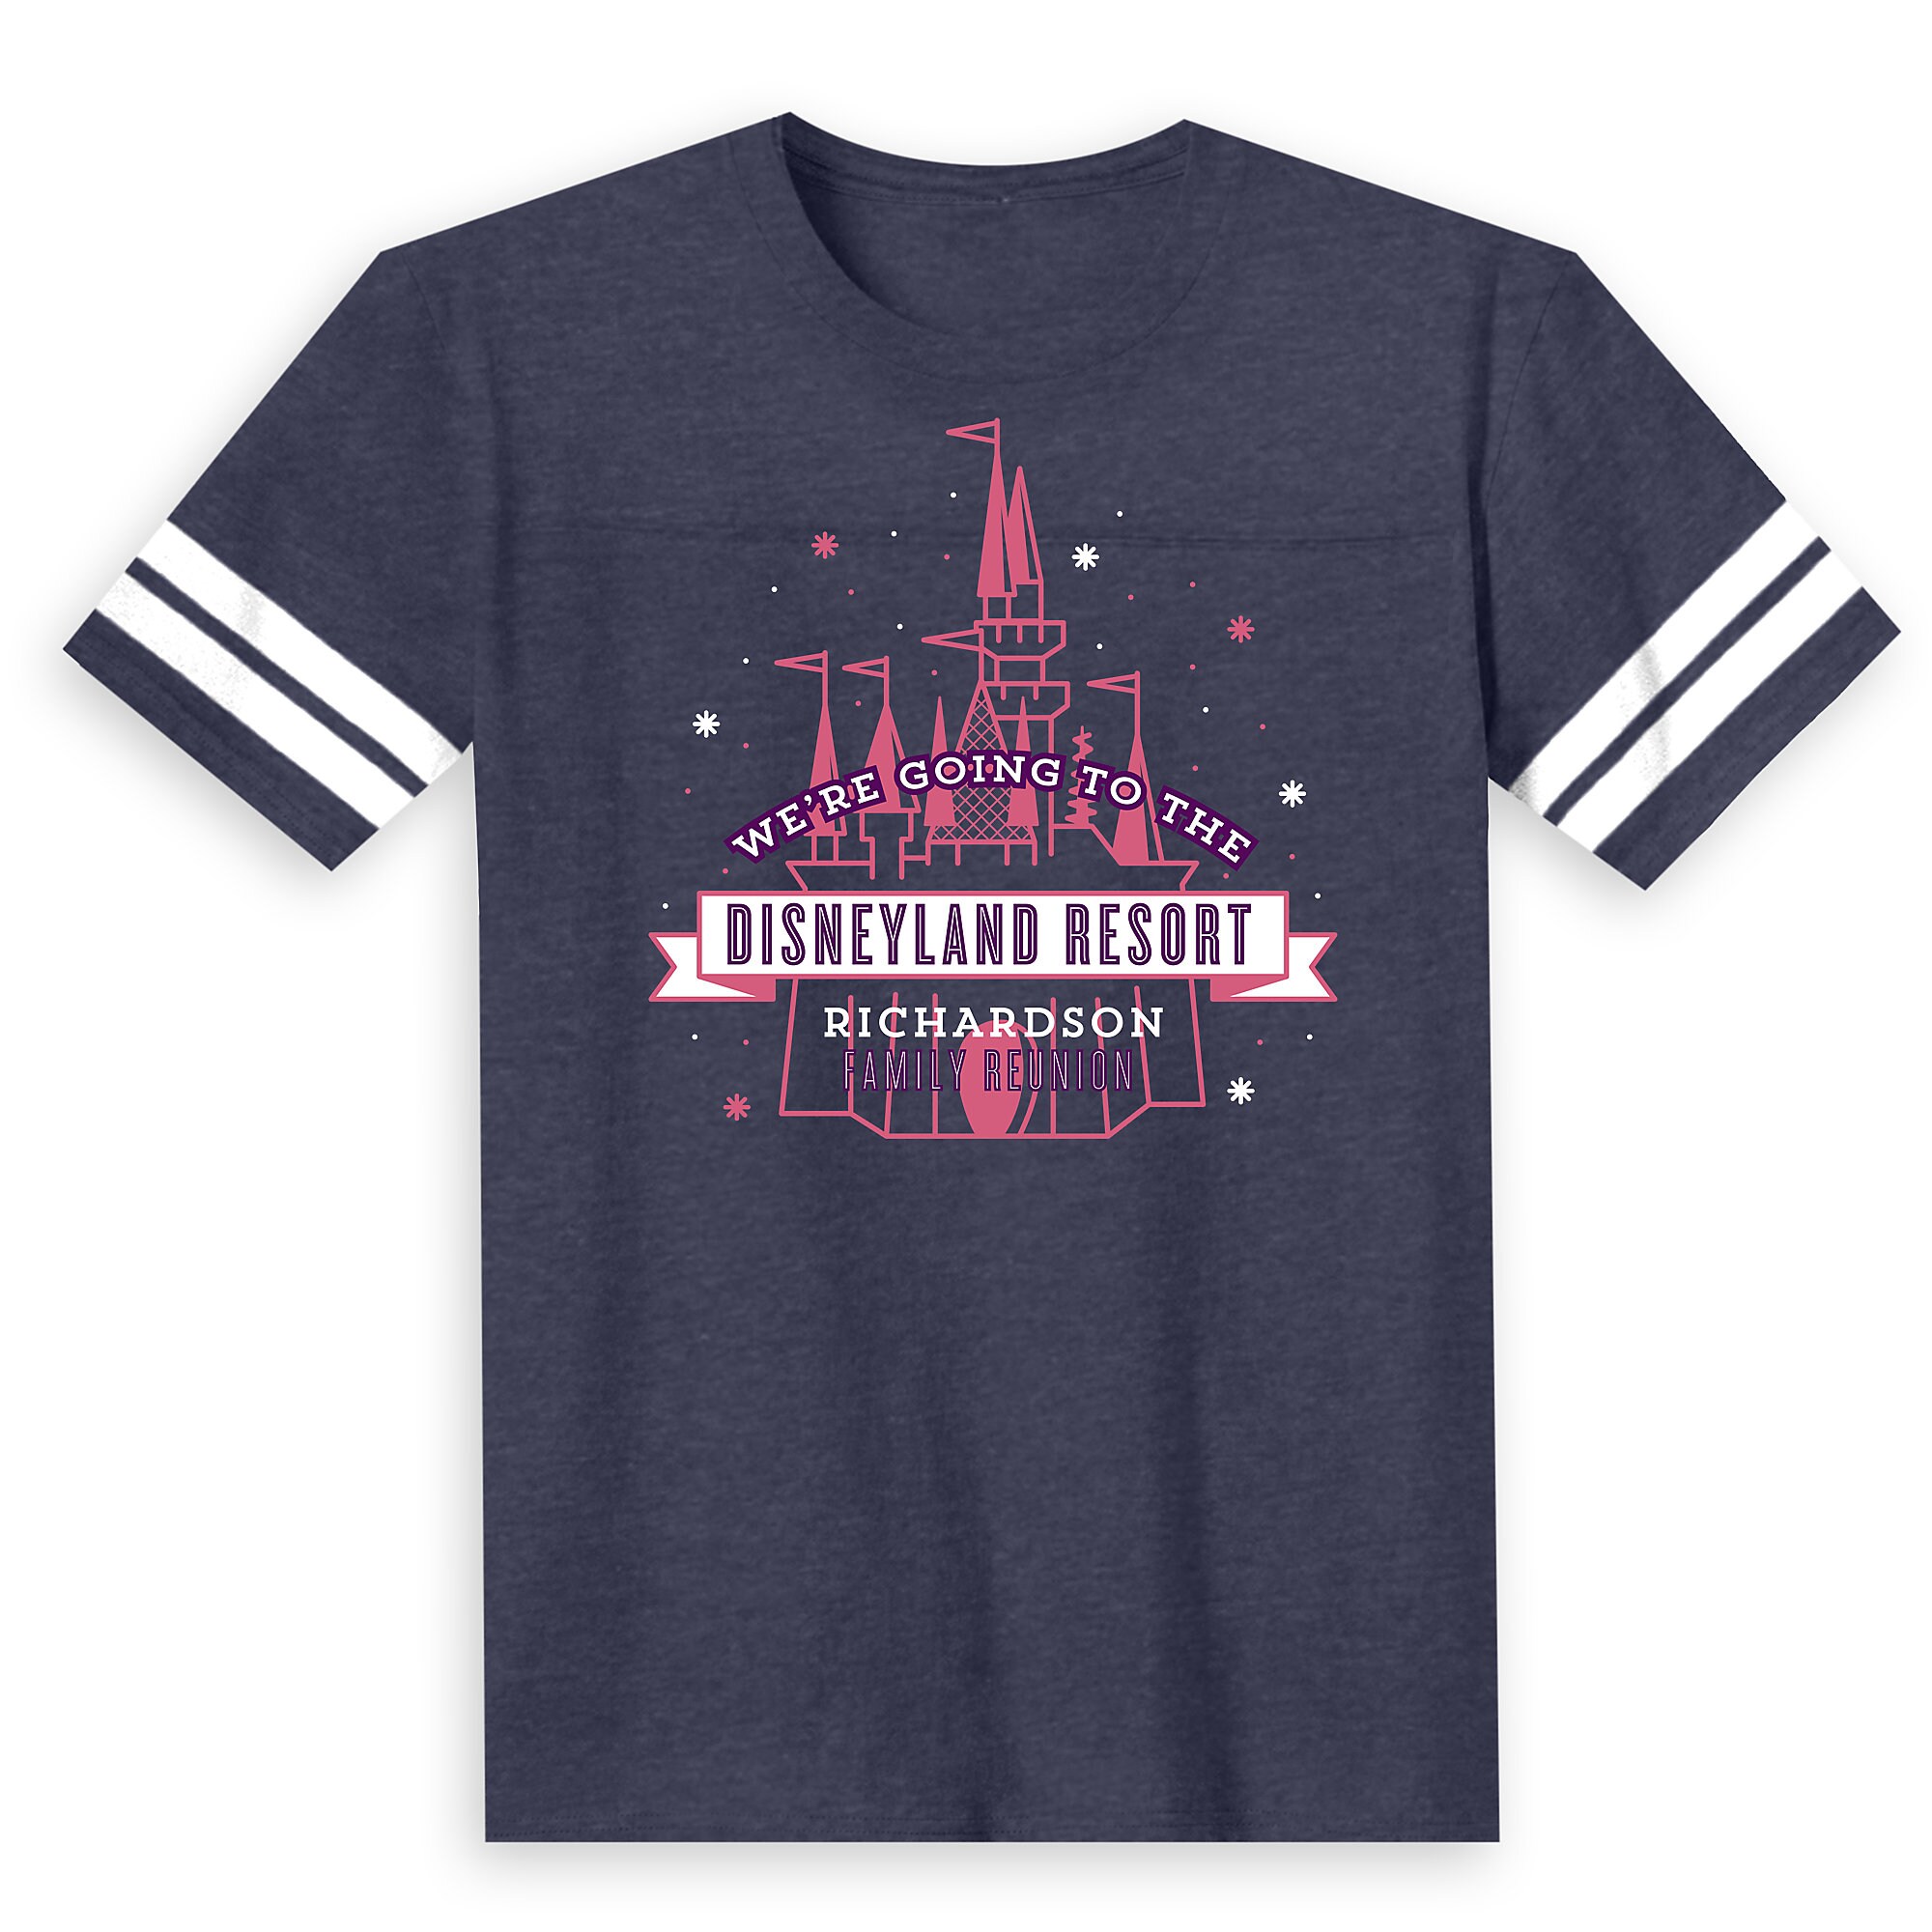 Kids' Sleeping Beauty Castle Family Reunion Football T-Shirt - Disneyland Resort - Customized